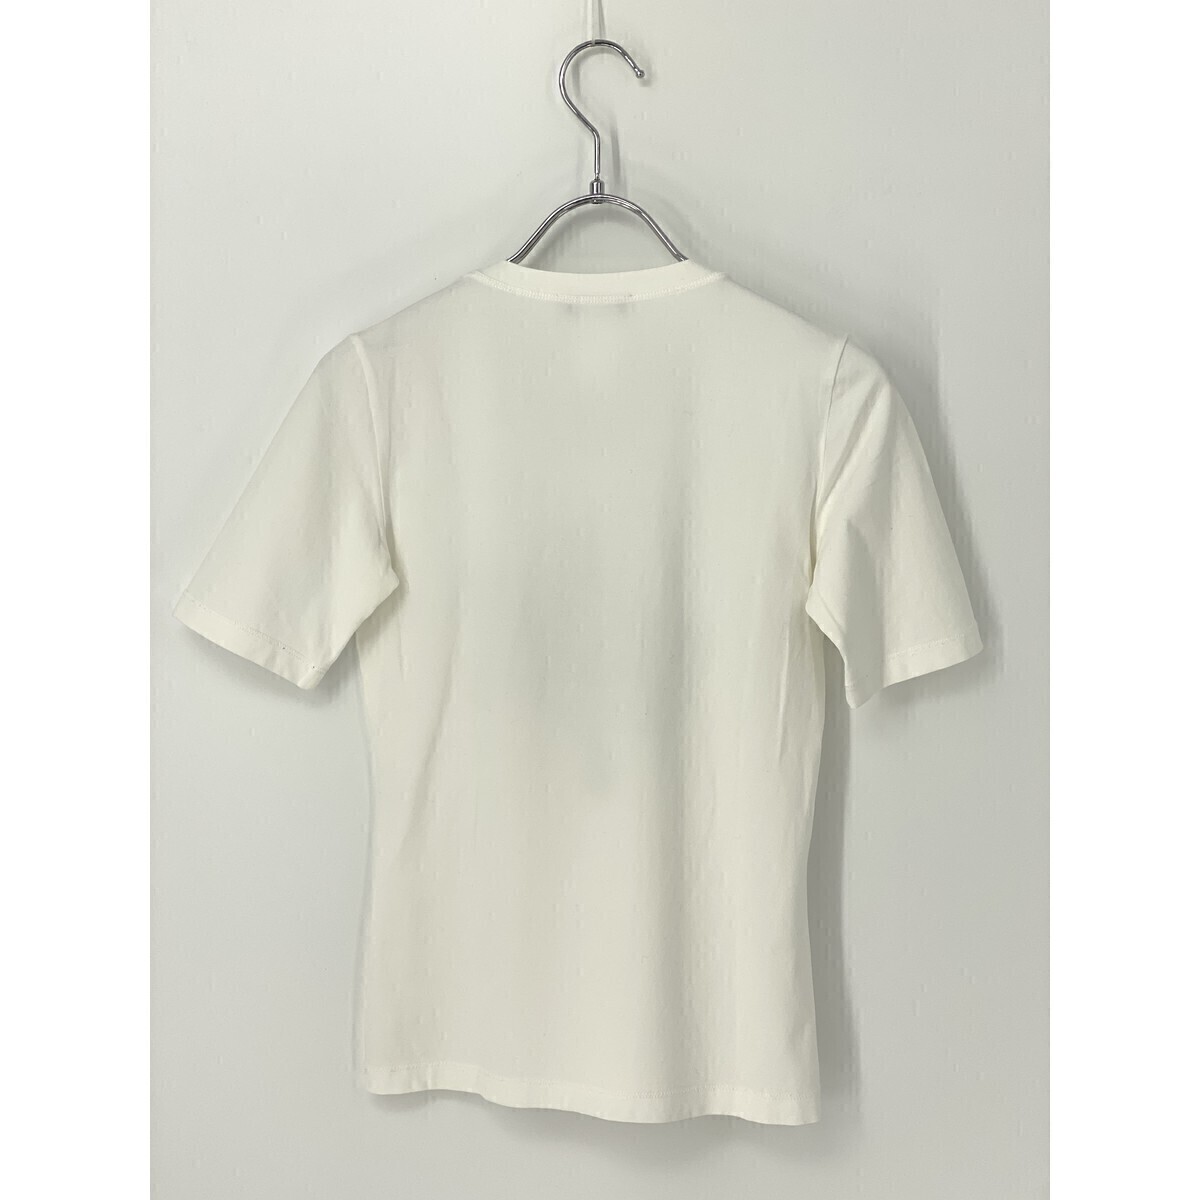 A8350/美品 春夏 CELINE セリーヌ コットン ビッグ デカロゴ プリント Uネック 半袖 Tシャツ カットソー S 白/ポルトガル製 レディースの画像2